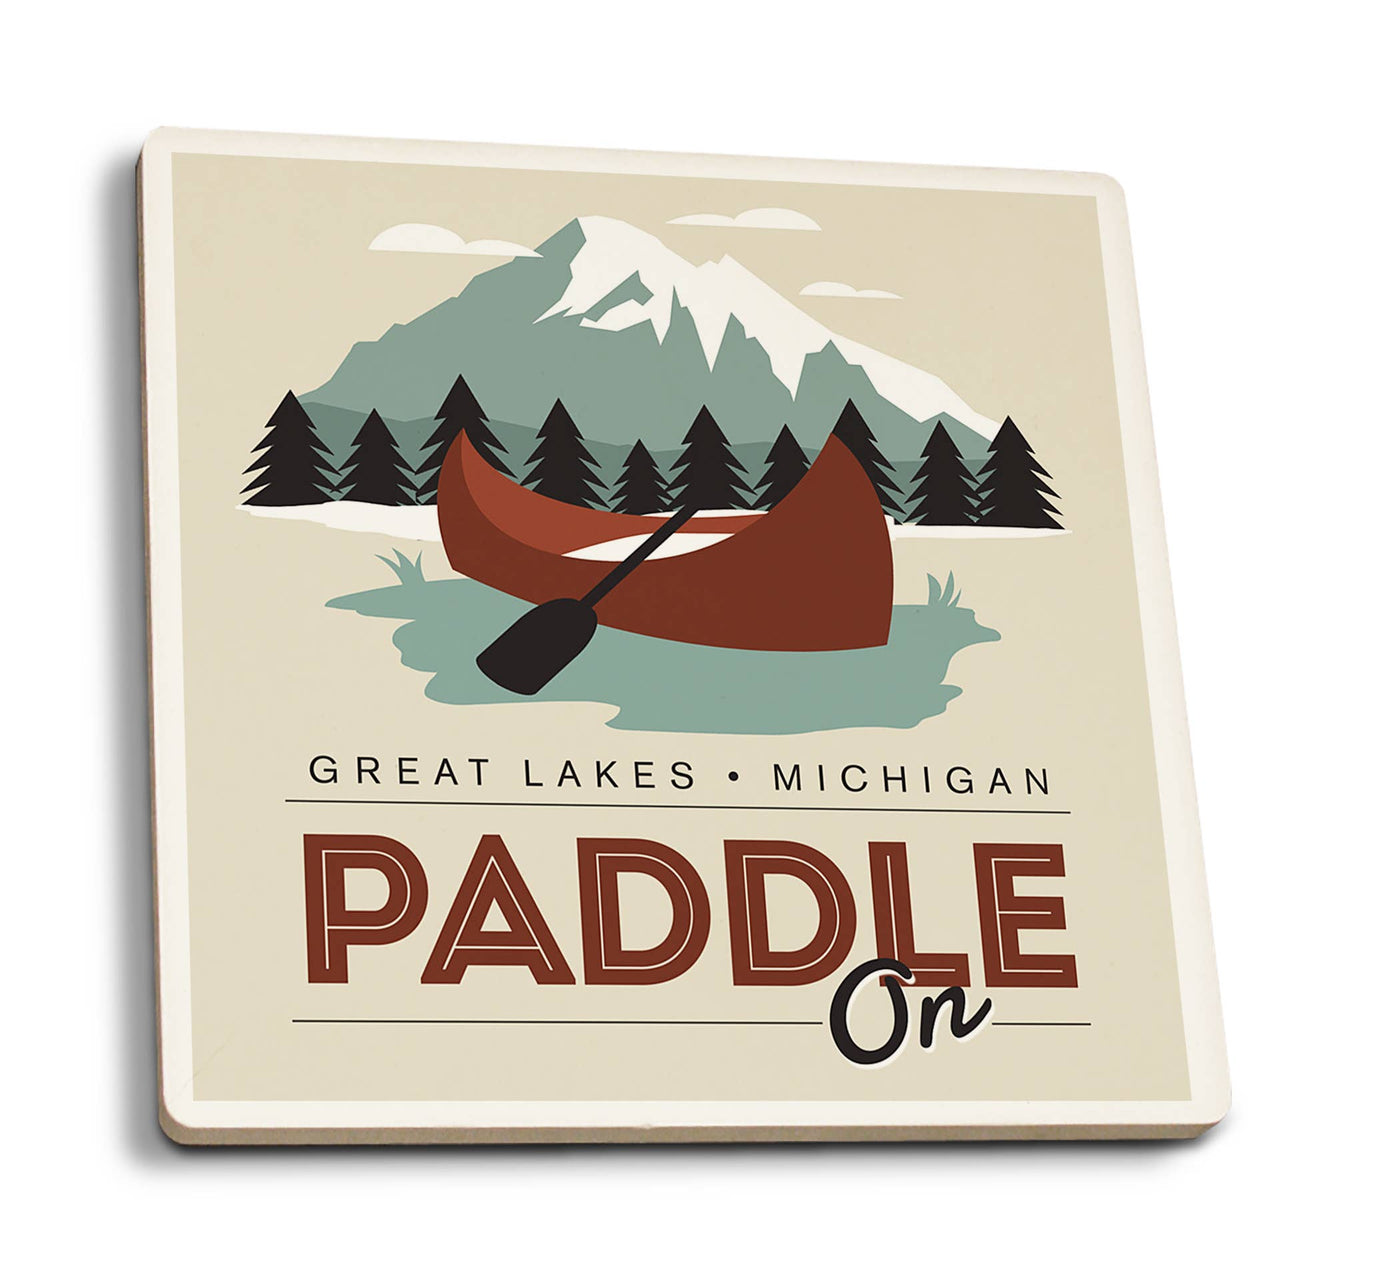 Great Lakes Michigan - Paddle On Ceramic Coasters